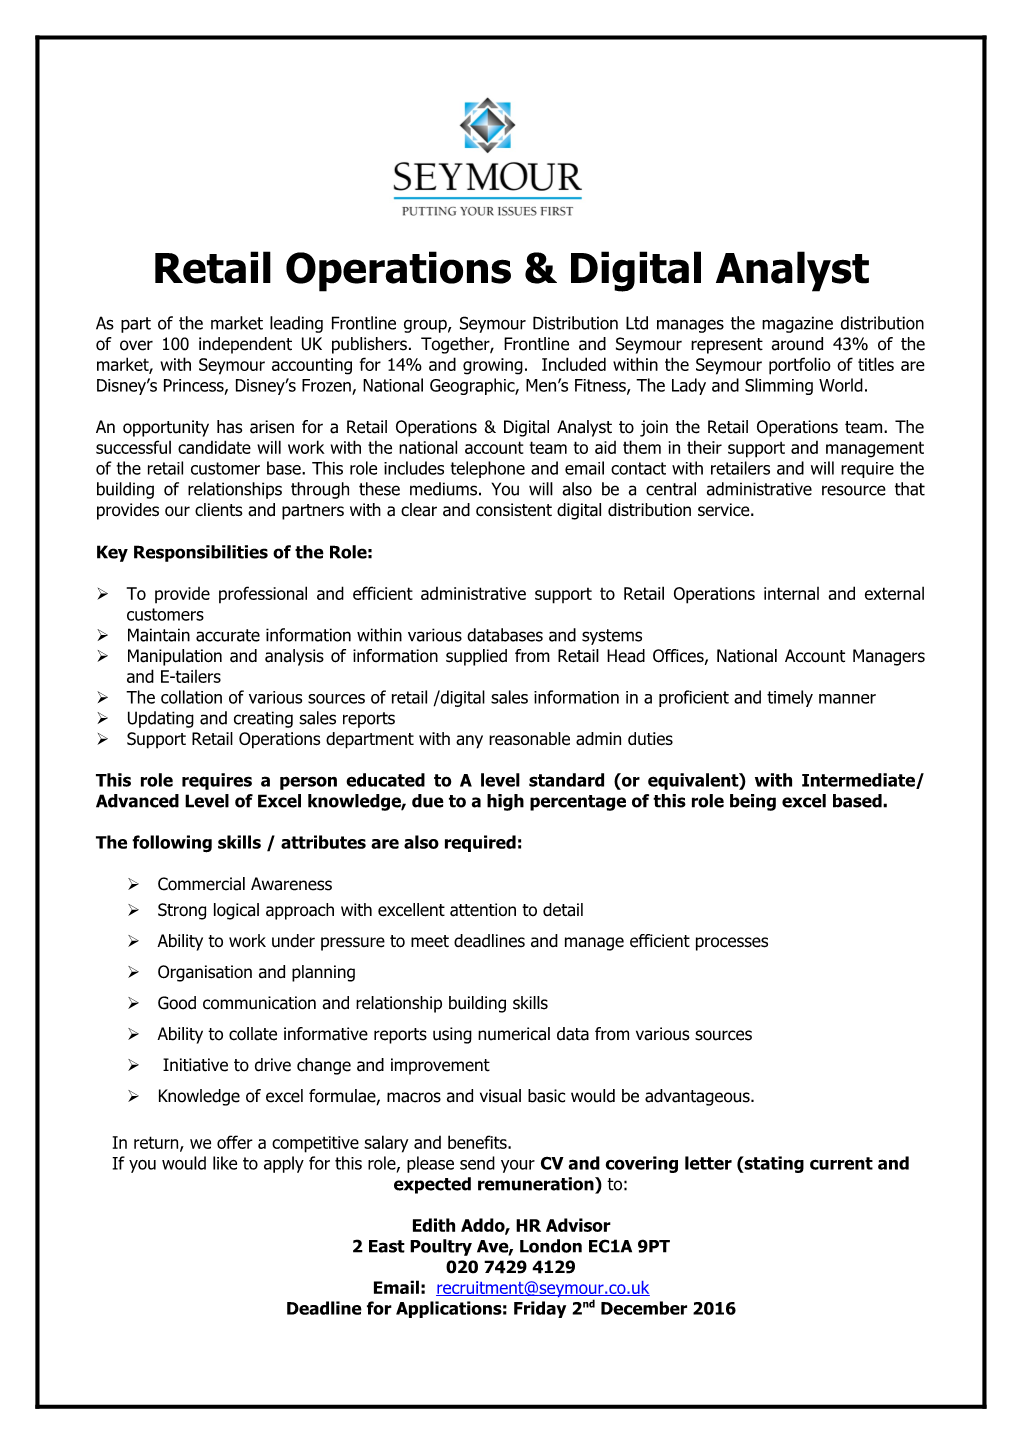 Retail Operations & Digital Analyst